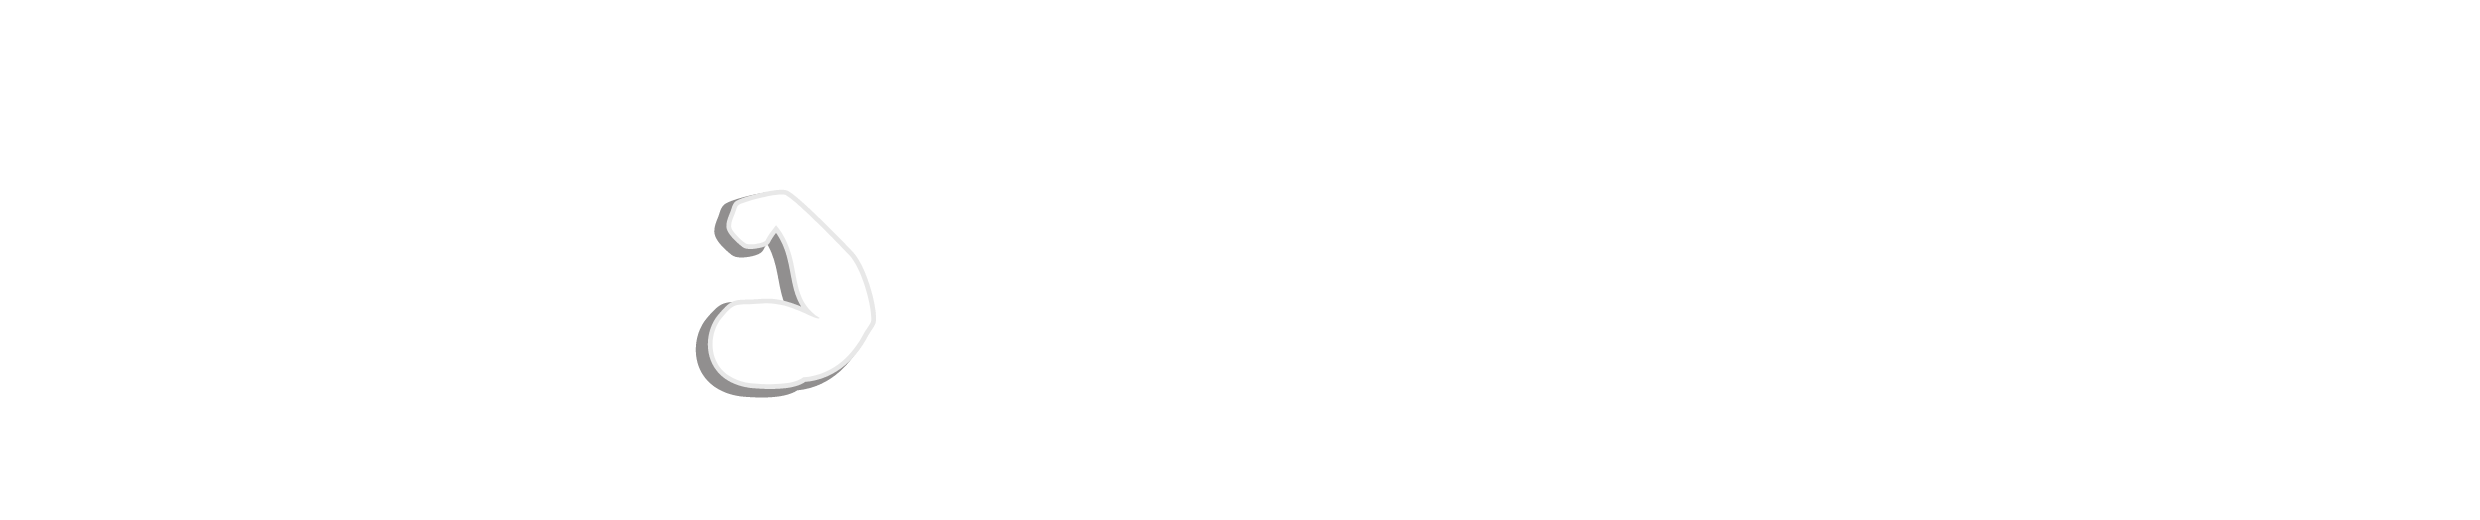 Mighty Marketing Mojo logo in white